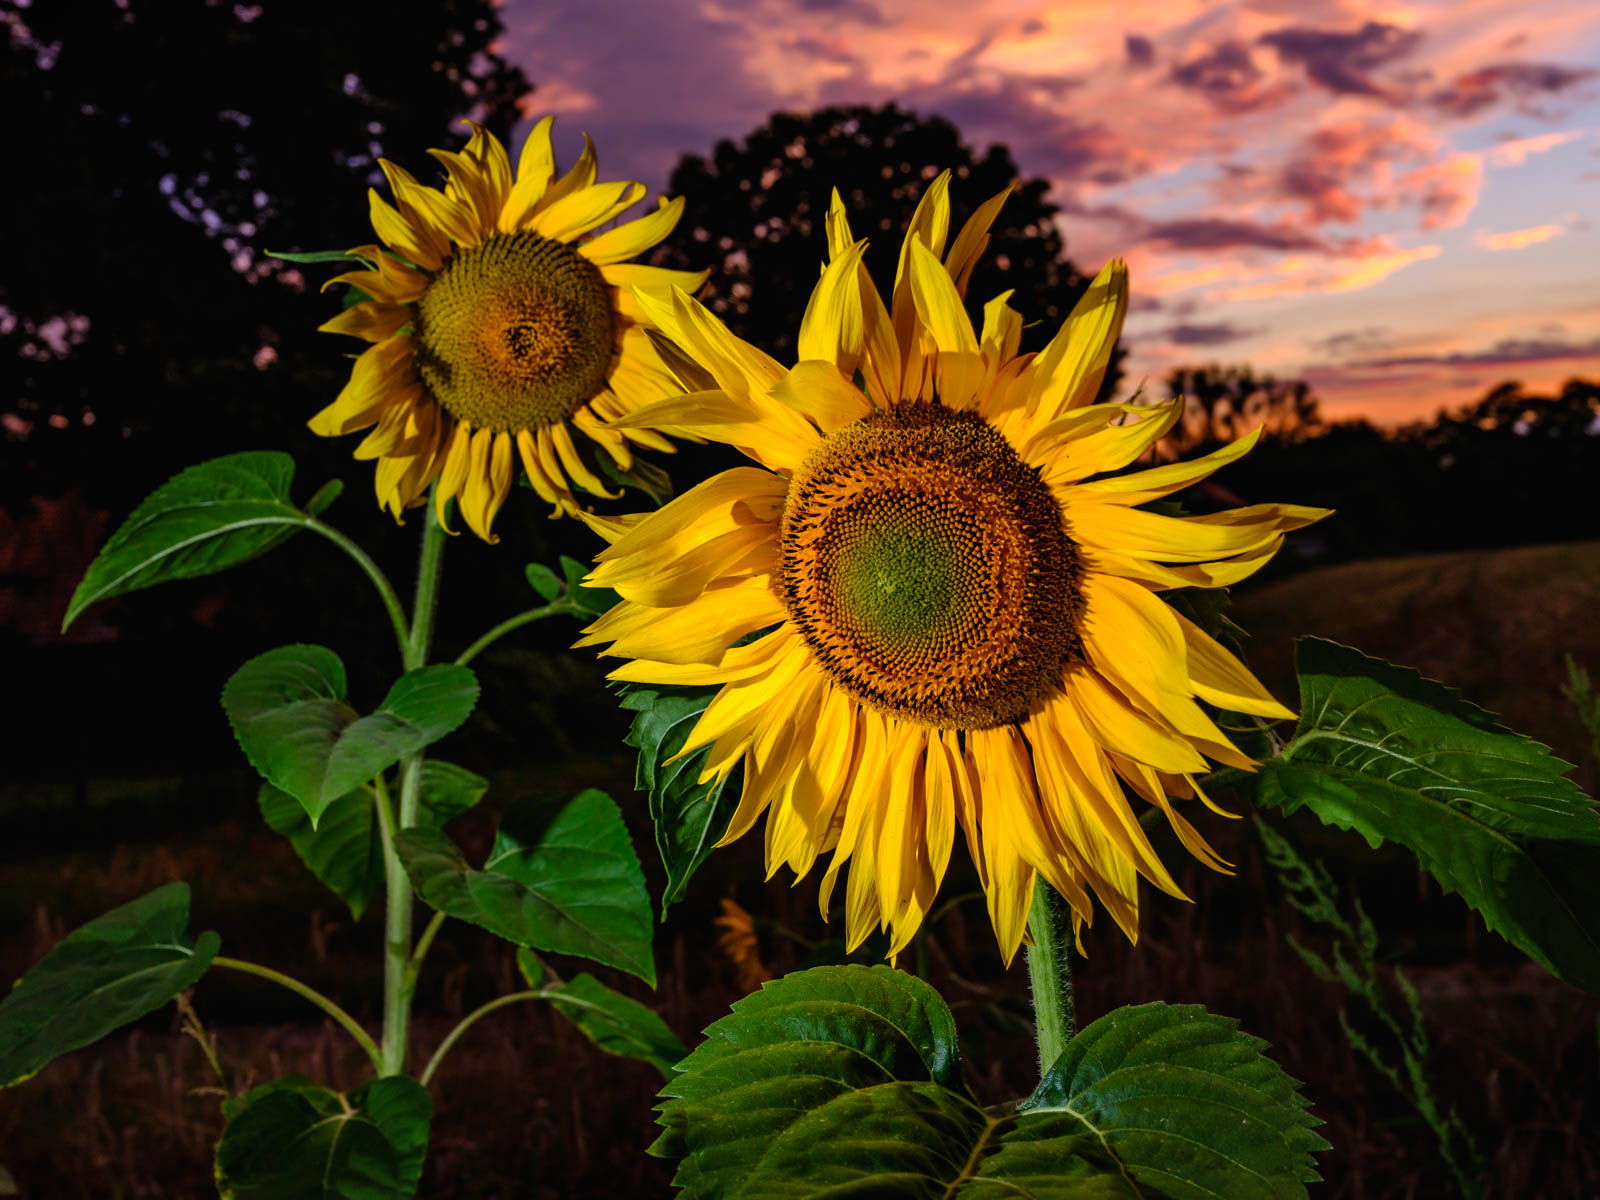 Sunflower flash fun on August 21, 2020 (Bielefeld, Germany).